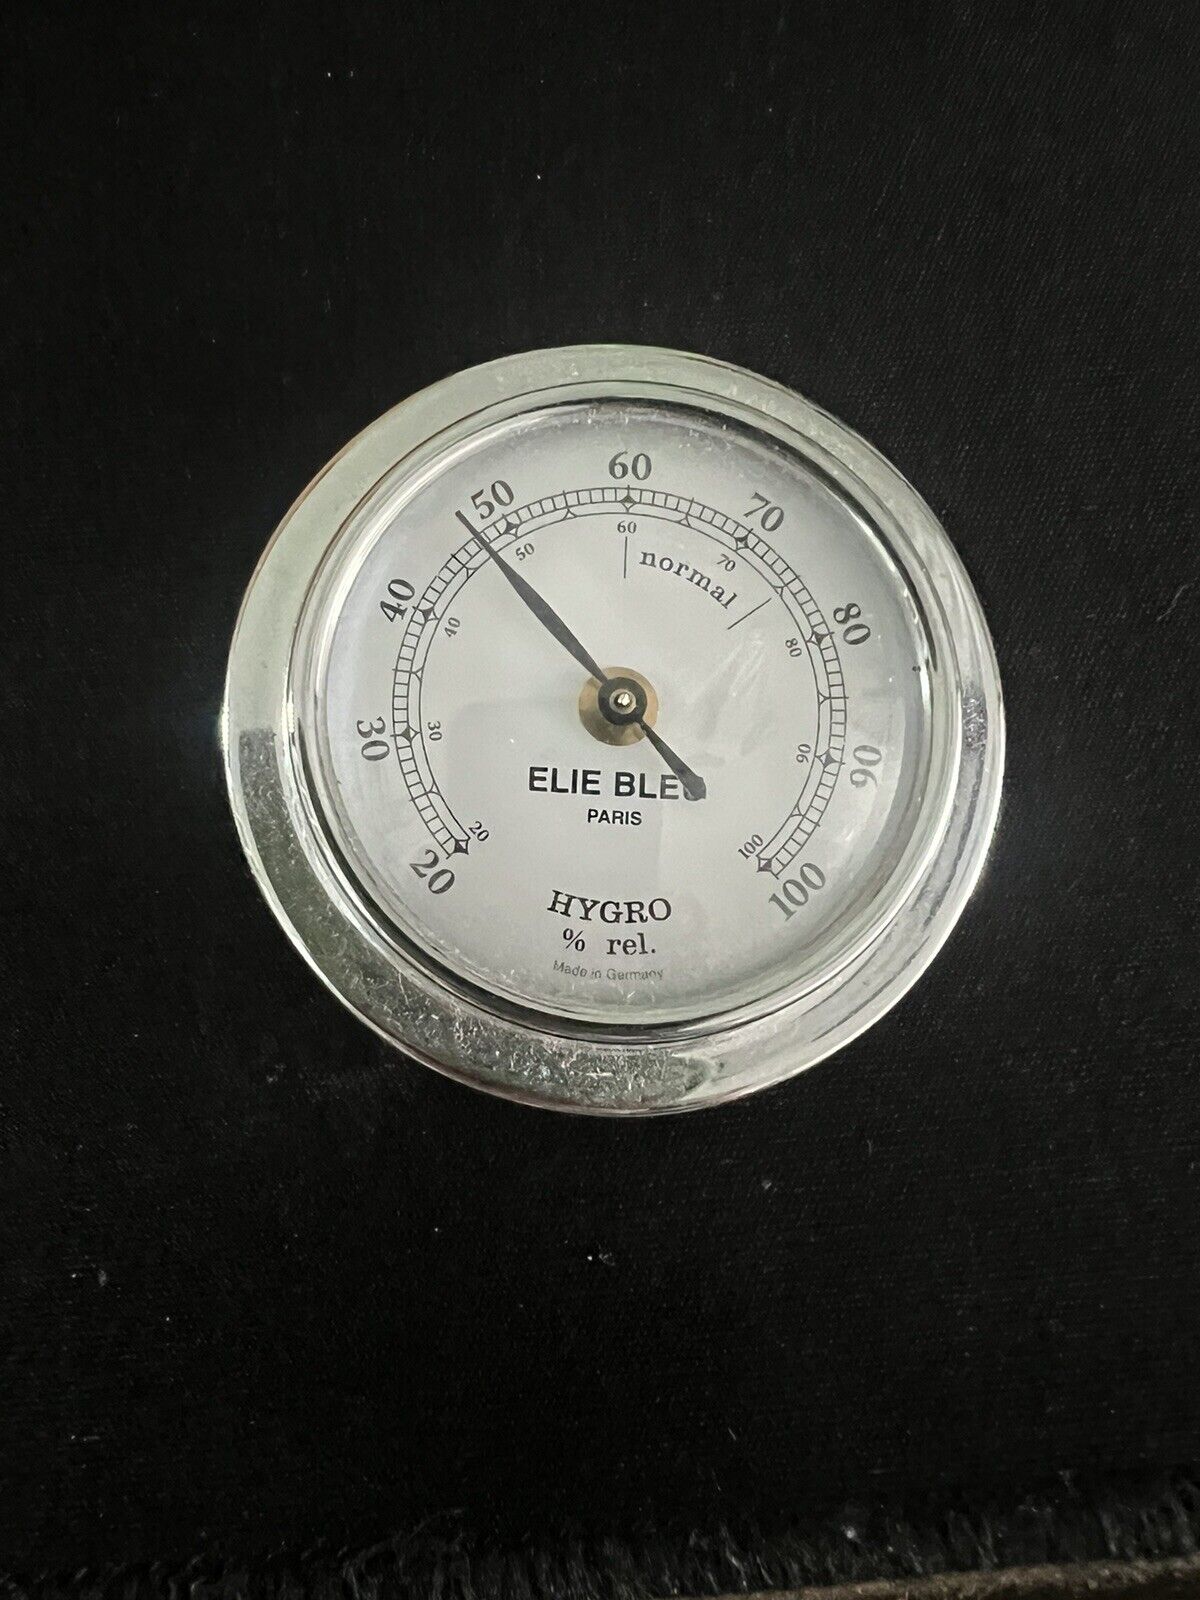 Elie Bleu Cigar Humidor Hygrometer Excellent Condition Made Is PARIS SHIPS ASAP